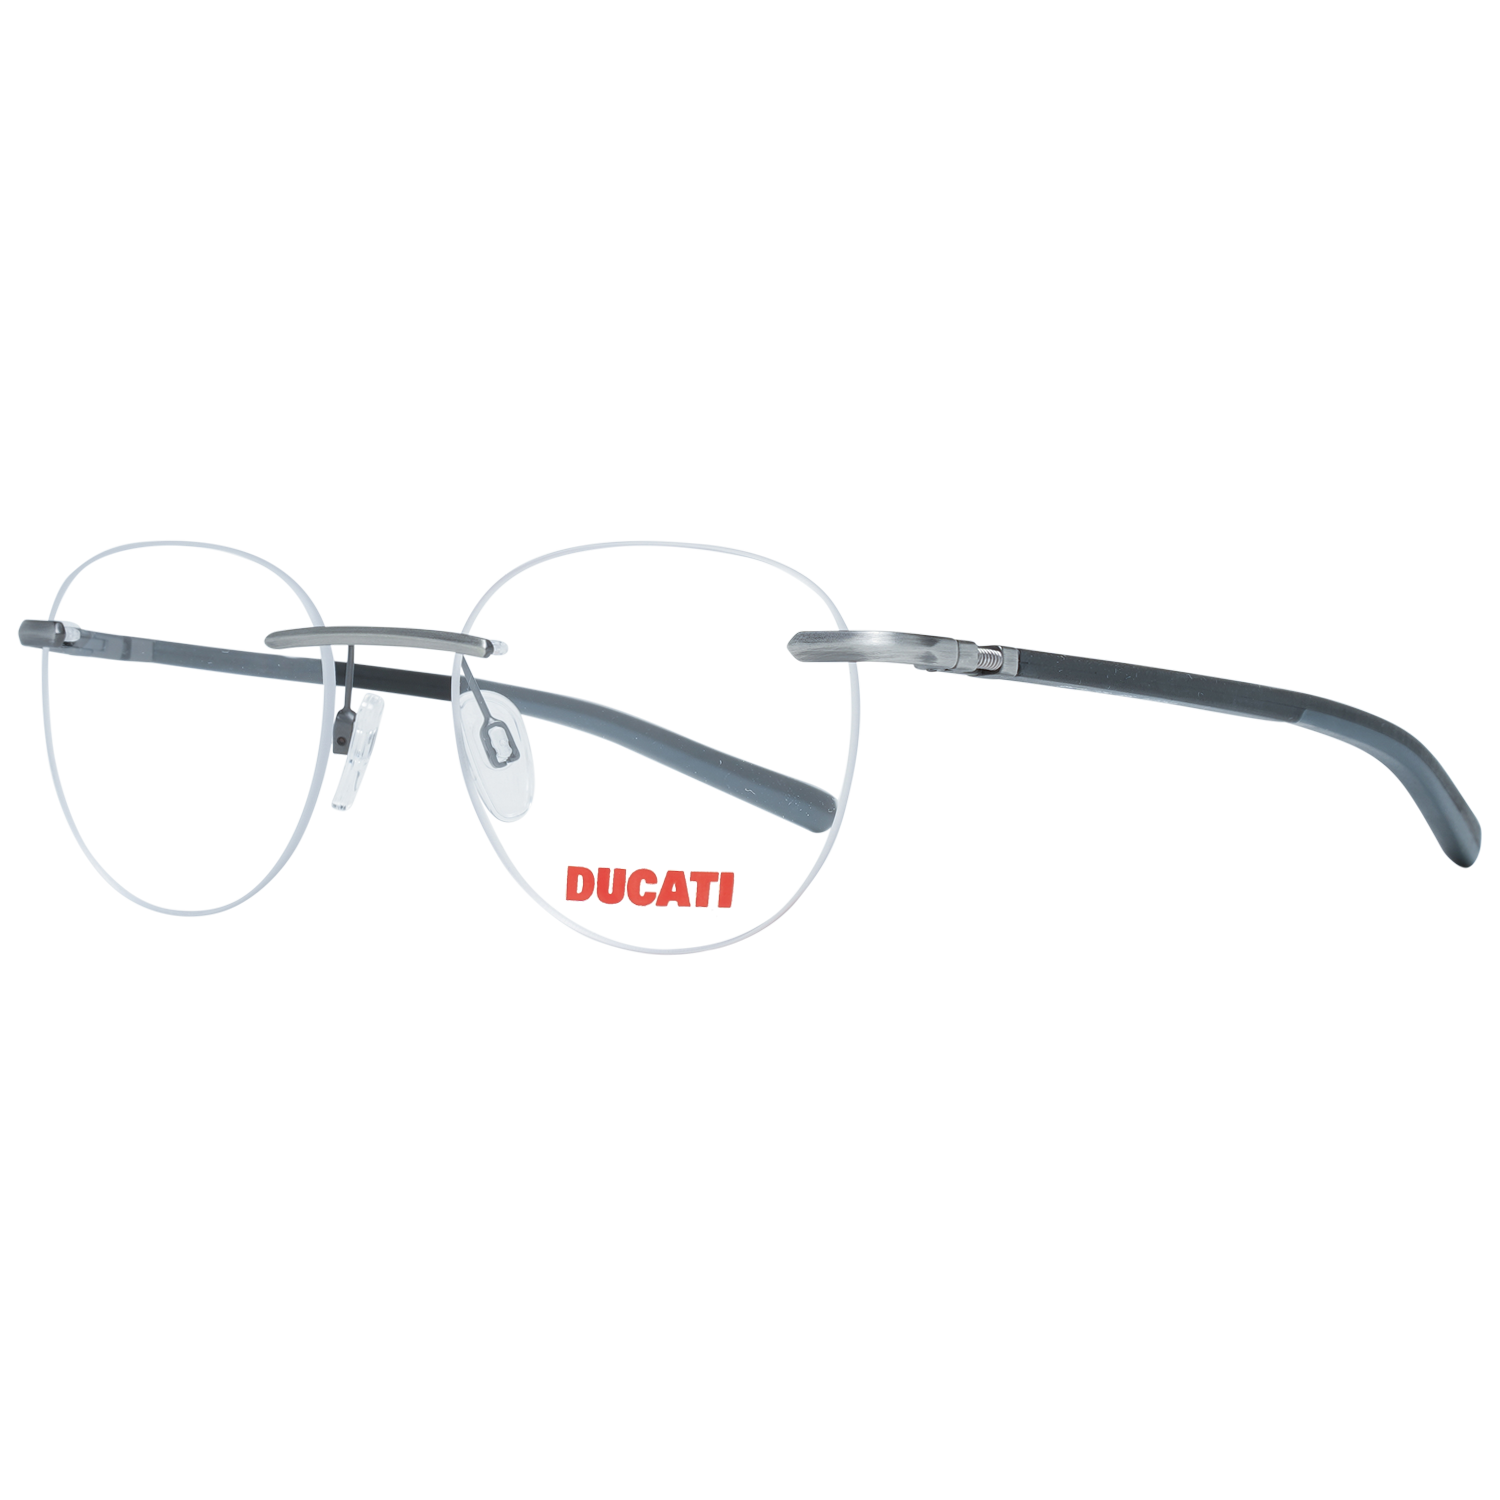 Ducati Frames Ducati Optical Frame DA3014 809 52 Eyeglasses Eyewear UK USA Australia 